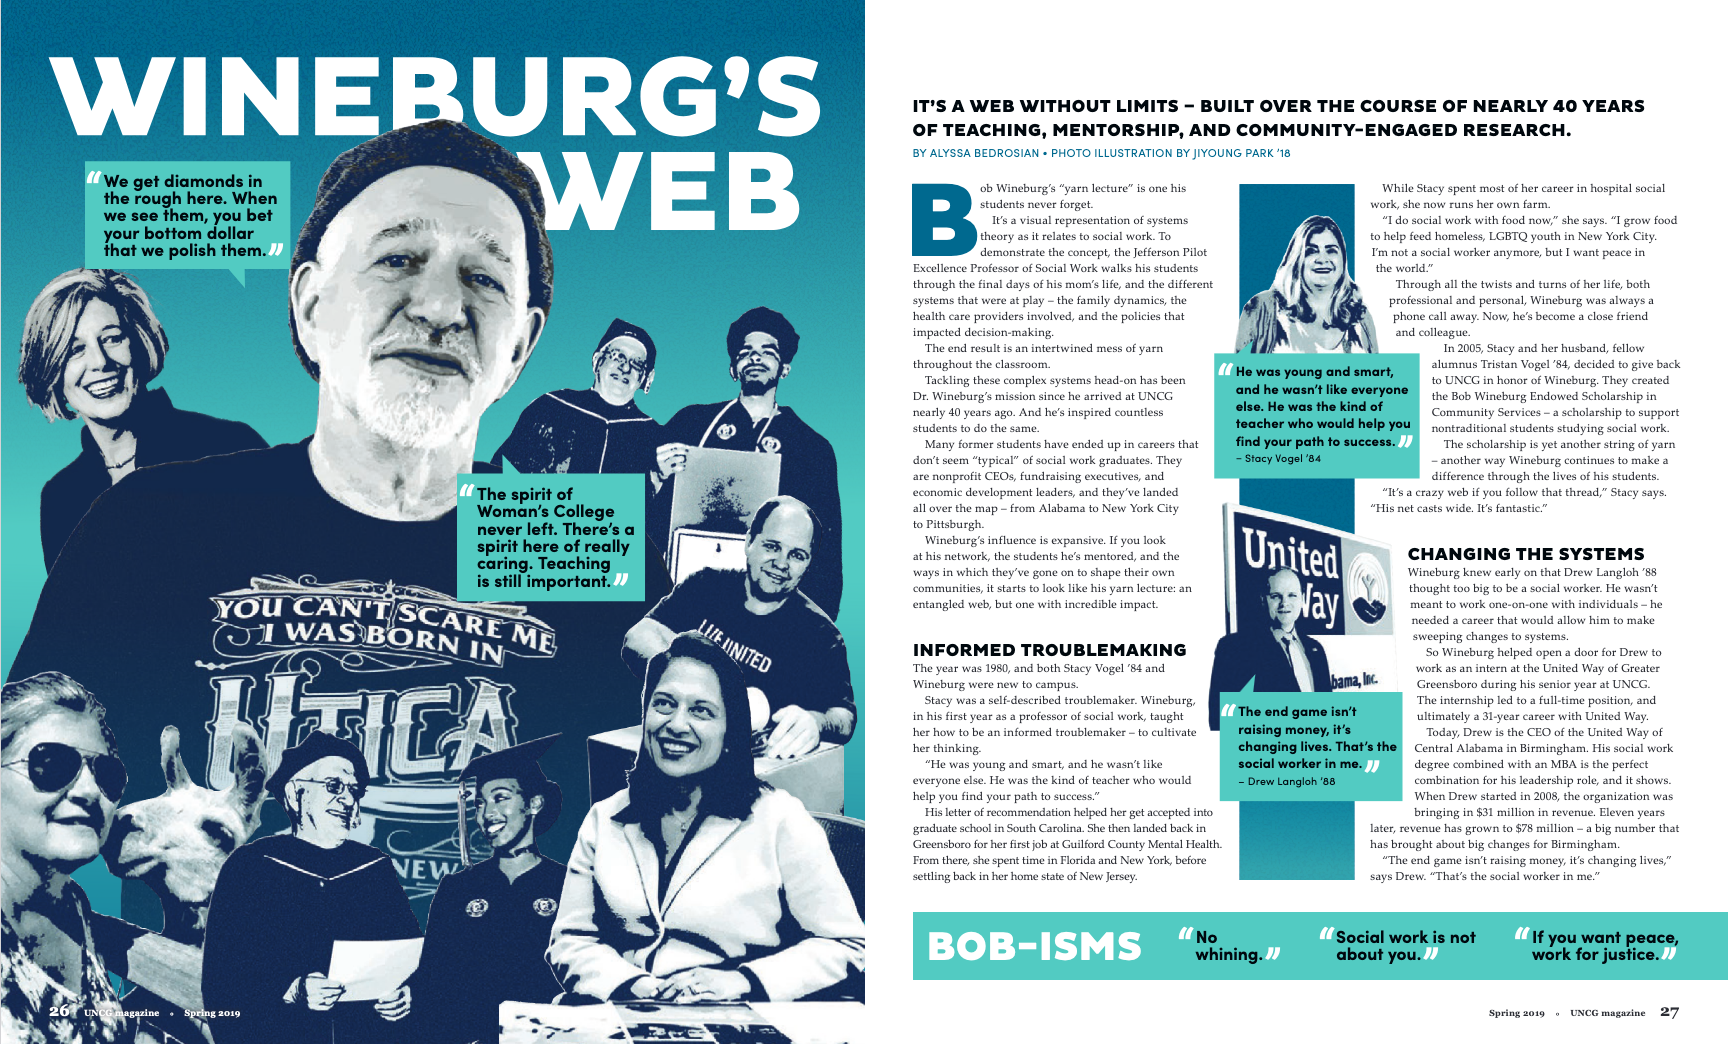 Dr. Bob Wineburg Featured in UNCG Magazine